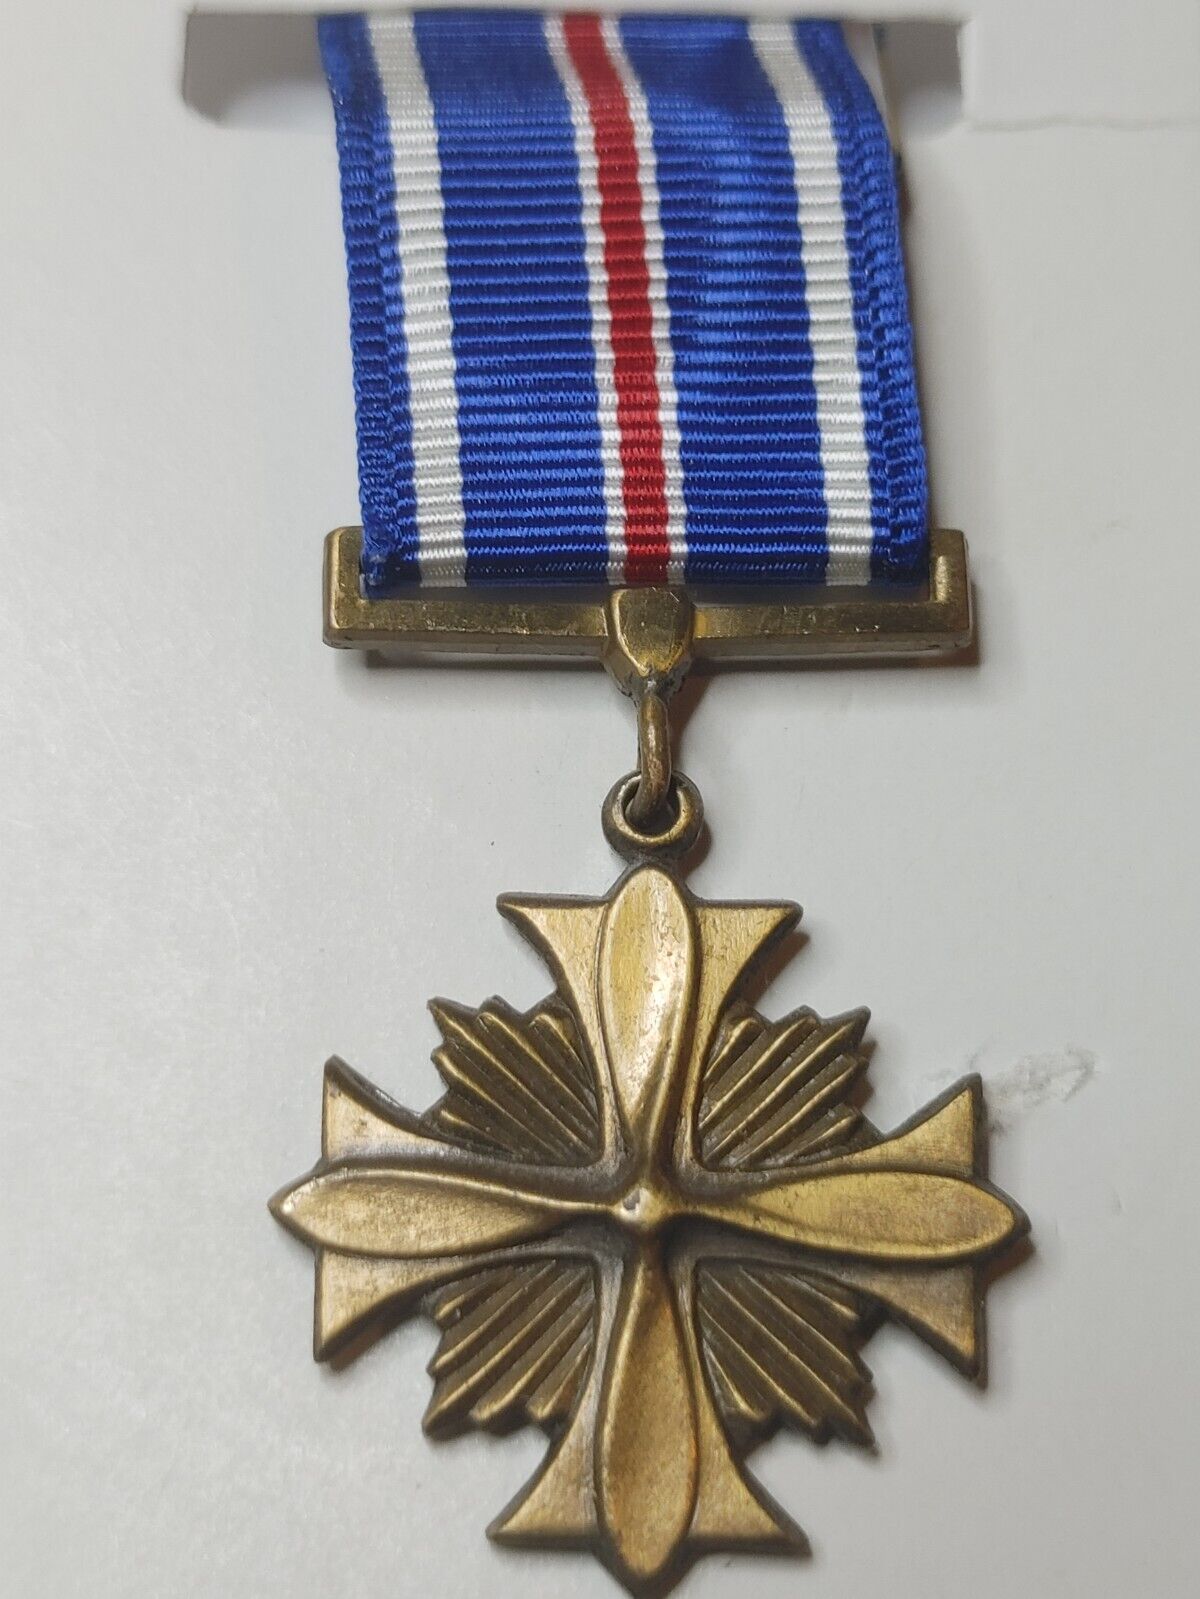 NOS US MILITARY Award Mini Distinguished Flying Cross 1969 -1971 Vietnam Period